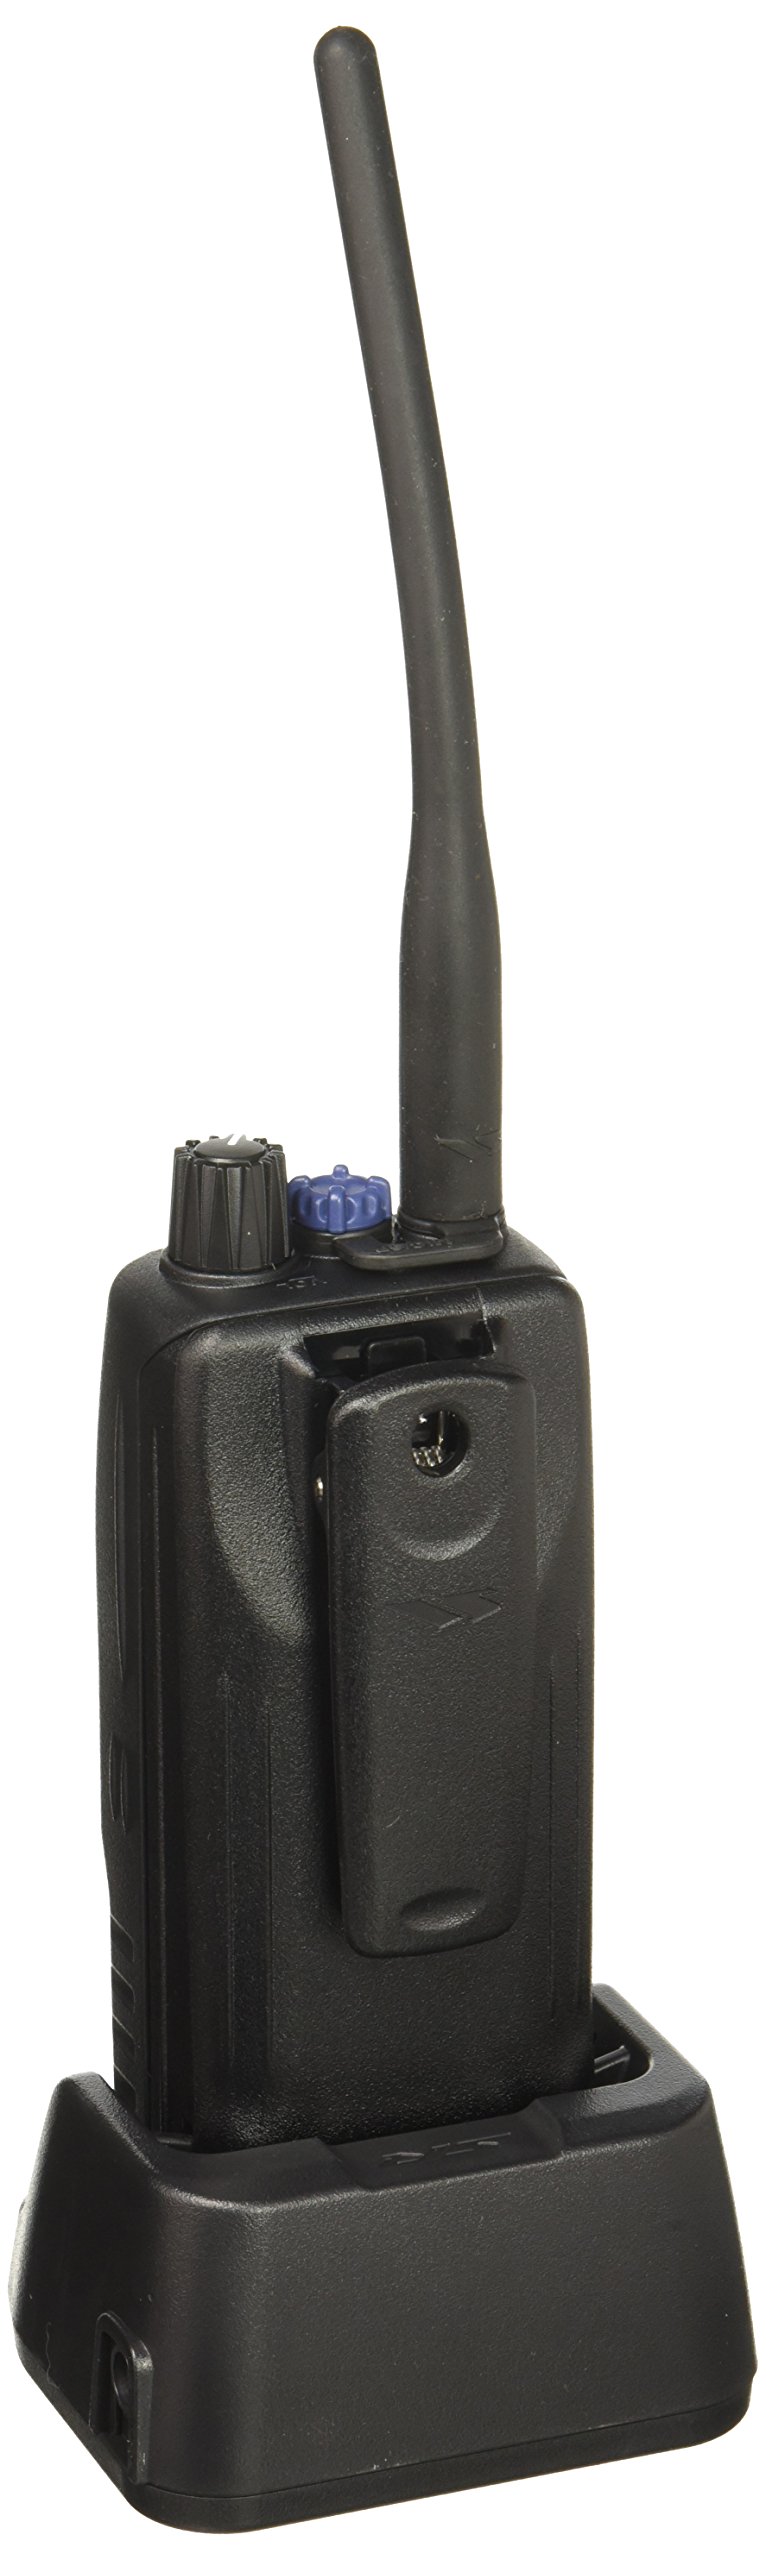 Standard Horizon HX400IS Intrinsically Safe Handheld VHF Radio